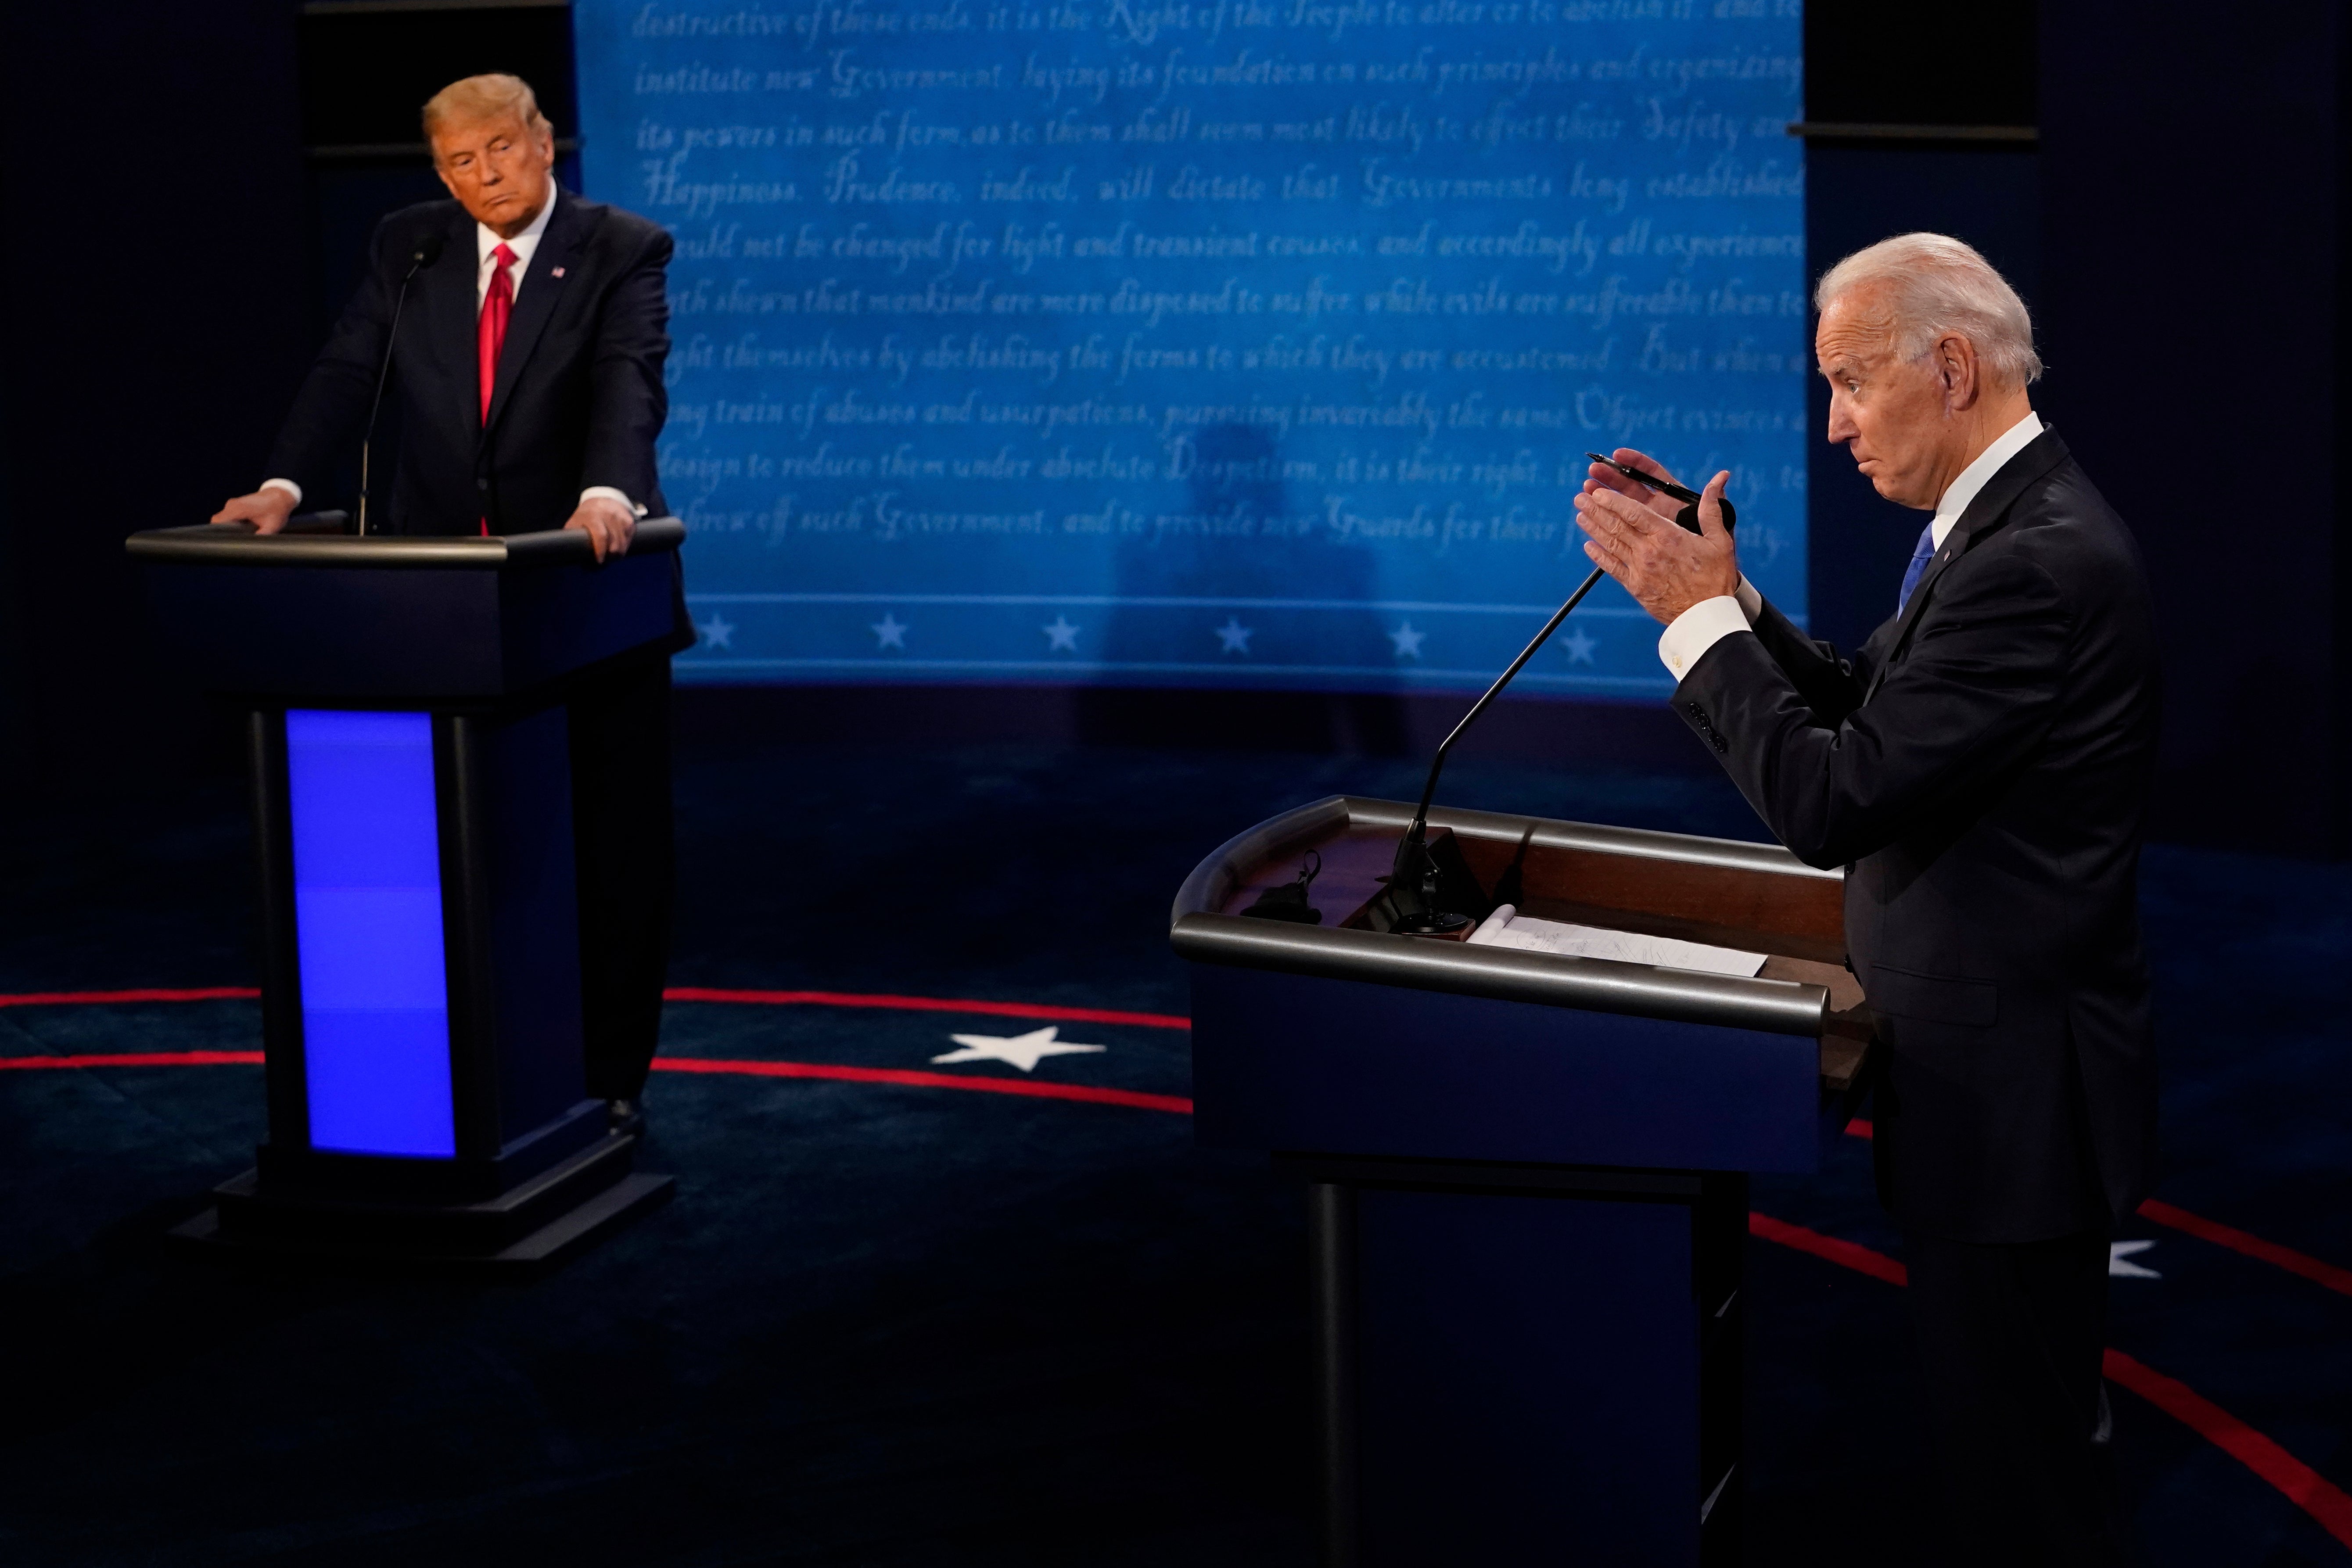 Donald Trump and Joe Biden debate on stage ahead of 2020 election